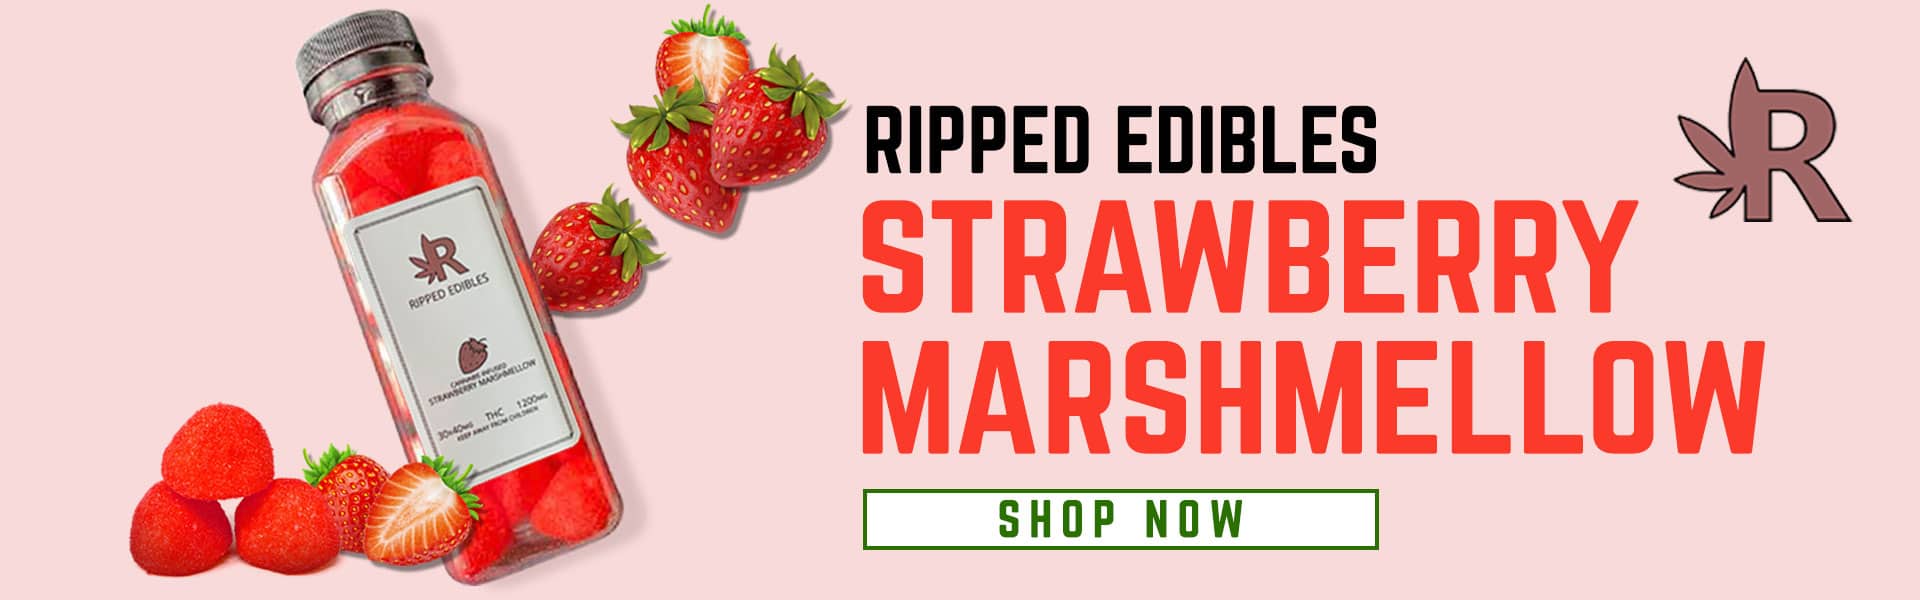 Re Strawberry Marshmellow Banner 1920x600 1